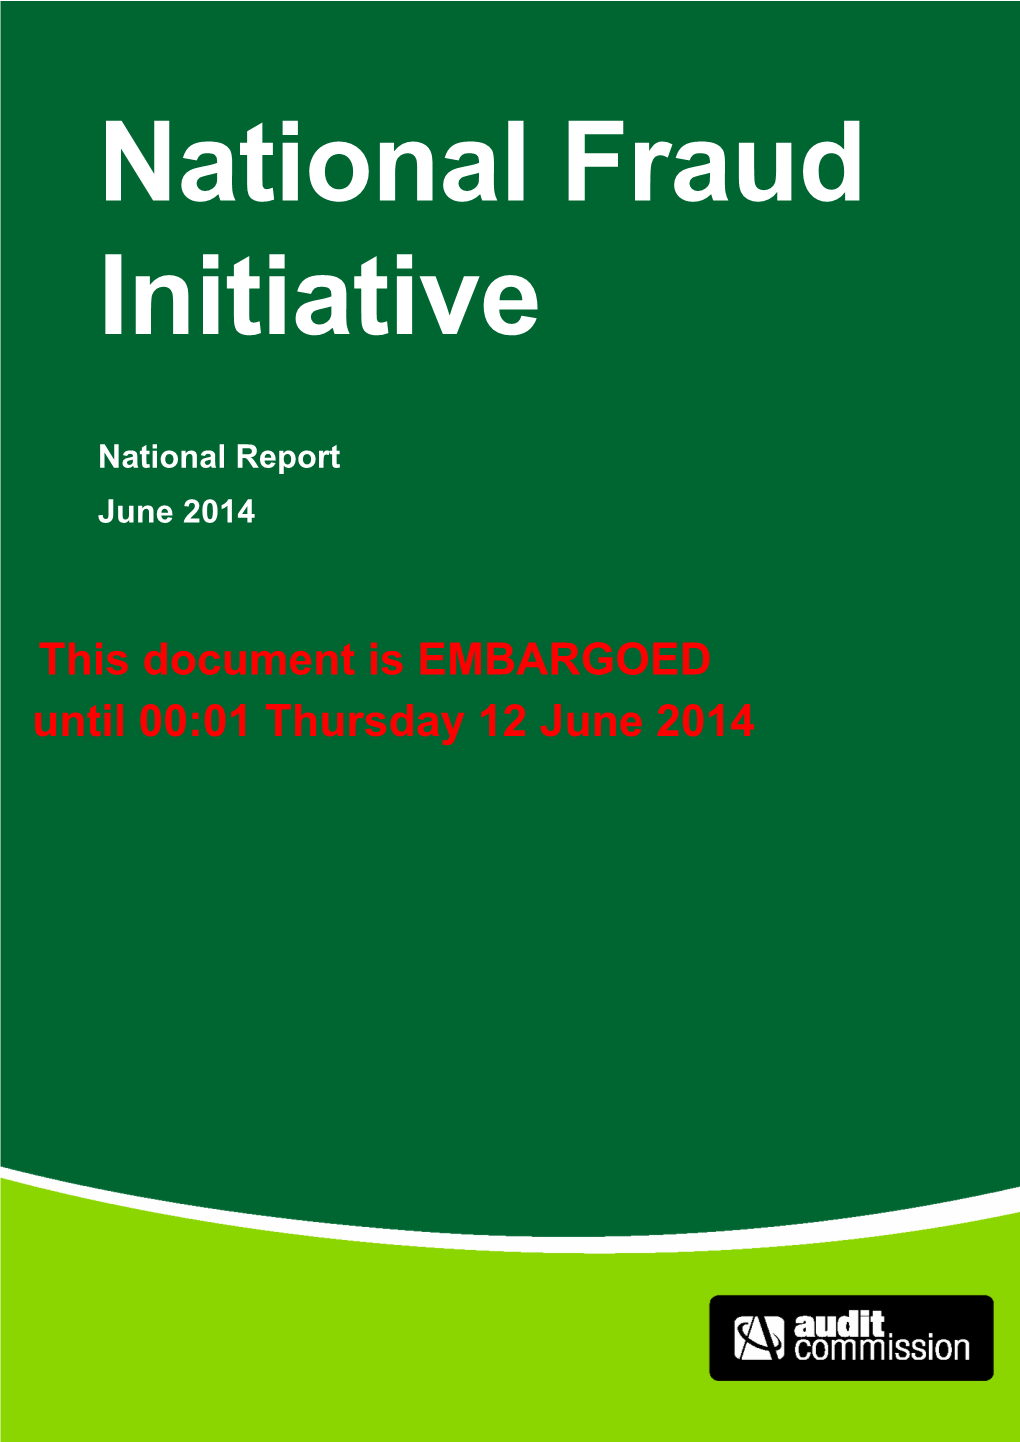 National Fraud Initiative Report 2014